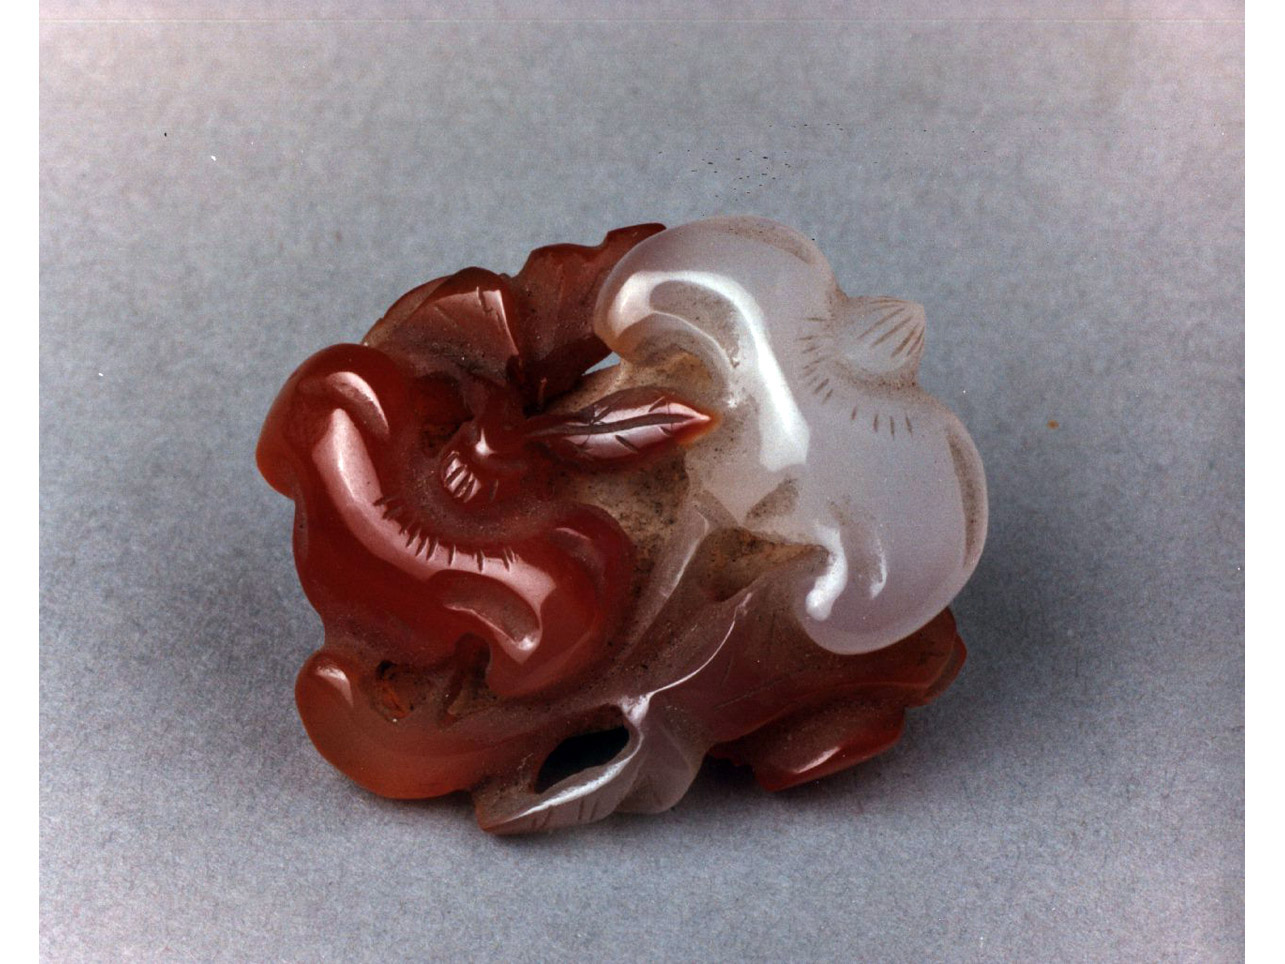 fiori di loto (soprammobile) - manifattura cinese (sec. XVIII)